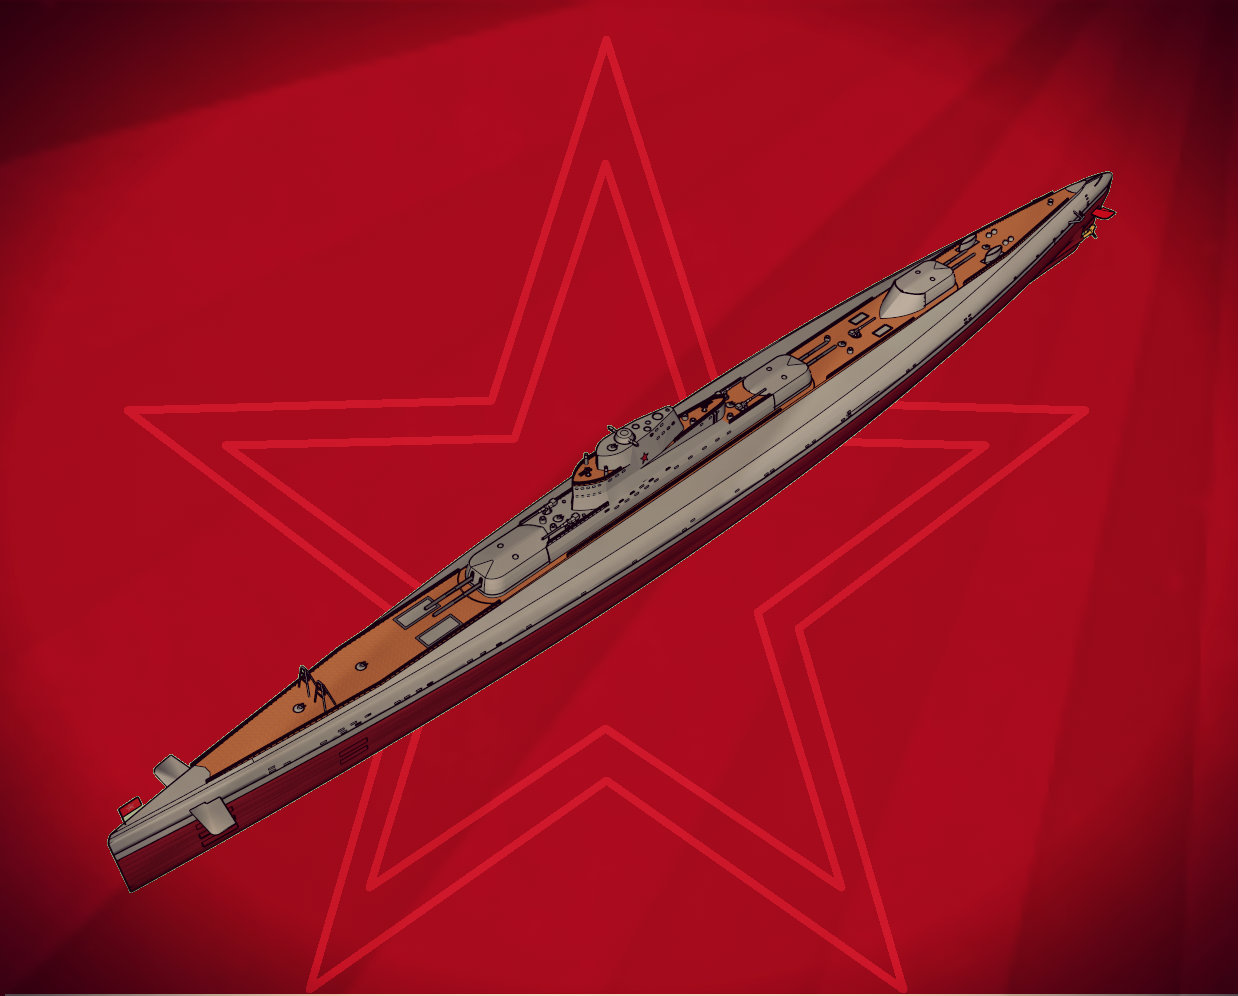 http://orig09.deviantart.net/1cdd/f/2015/236/f/d/pioneer_class_corsair_submarine_by_dilandu-d96zmxj.jpg